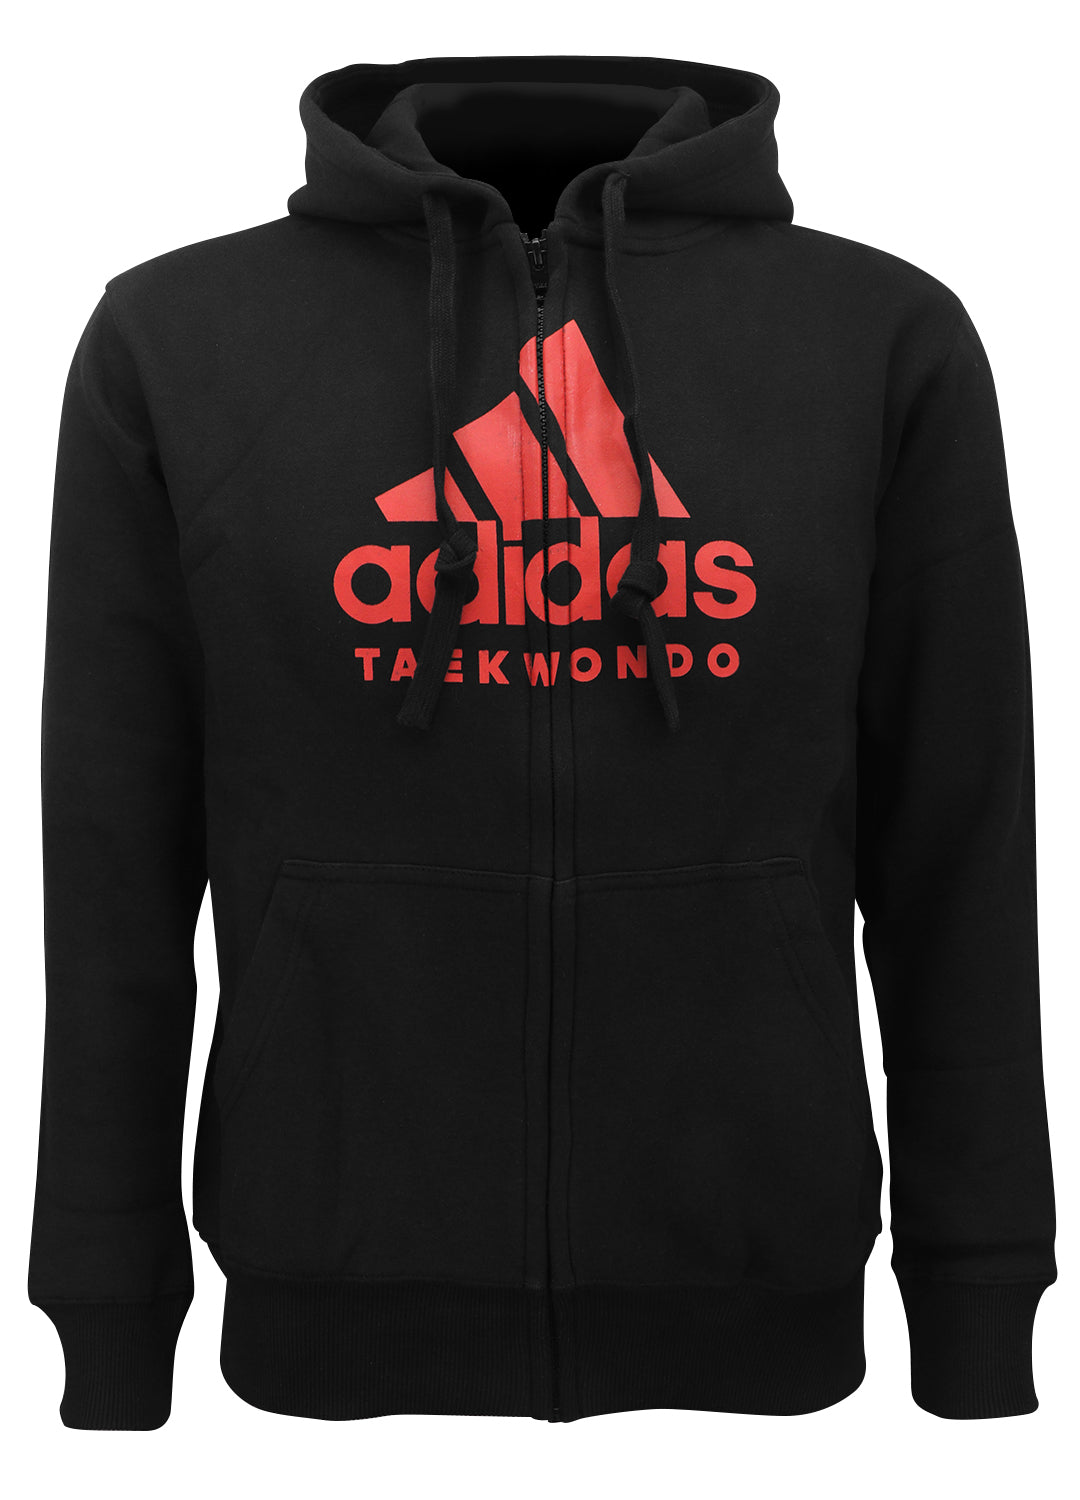 adidas taekwondo sweatshirt